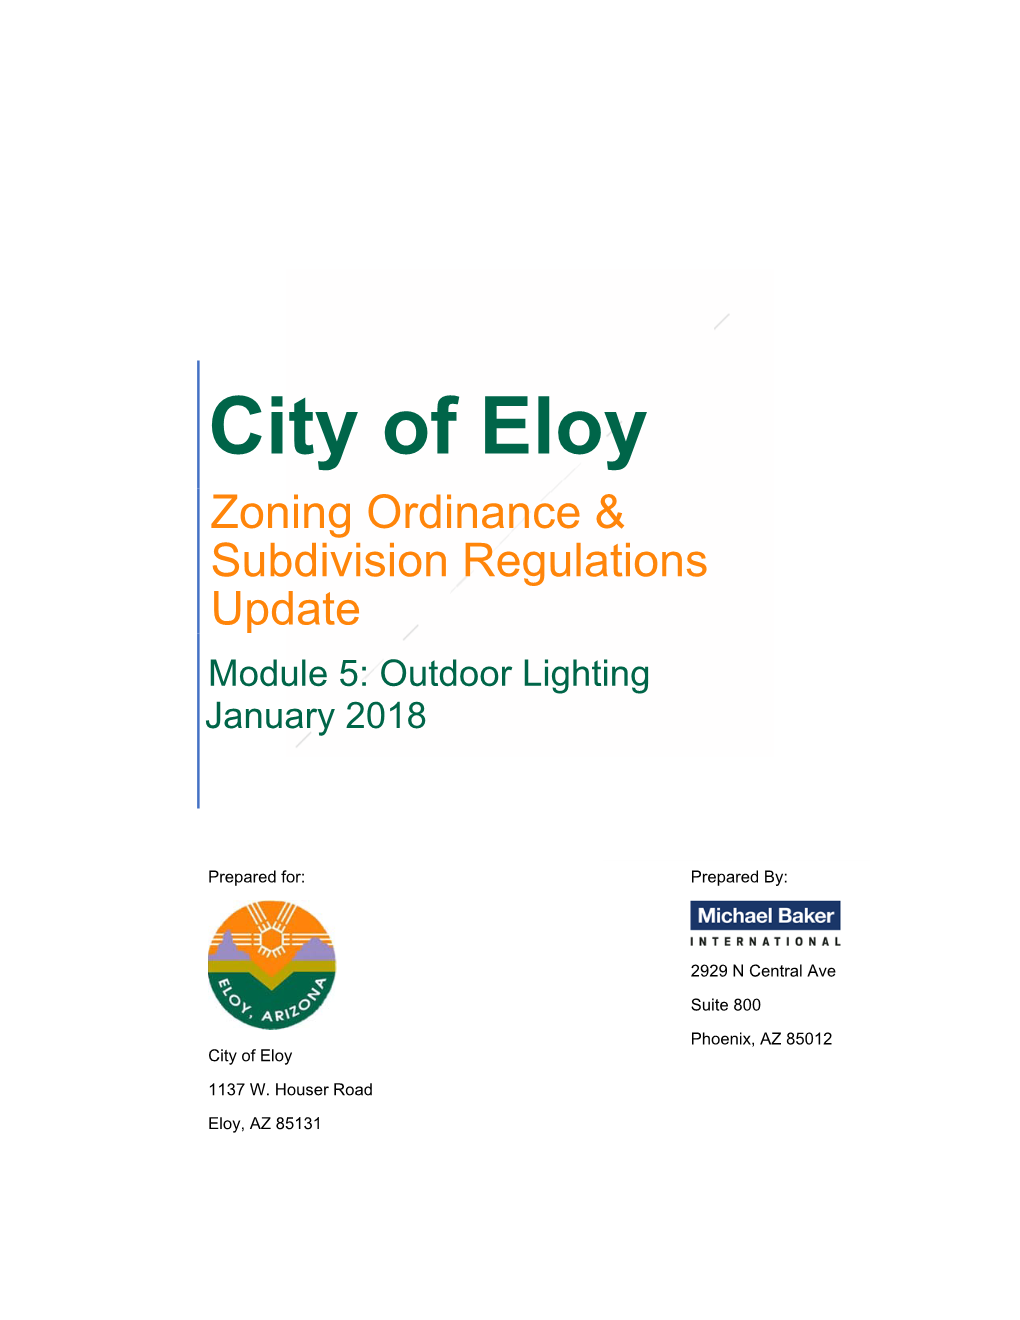 Zoning Ordinance & Subdivision Regulations Update